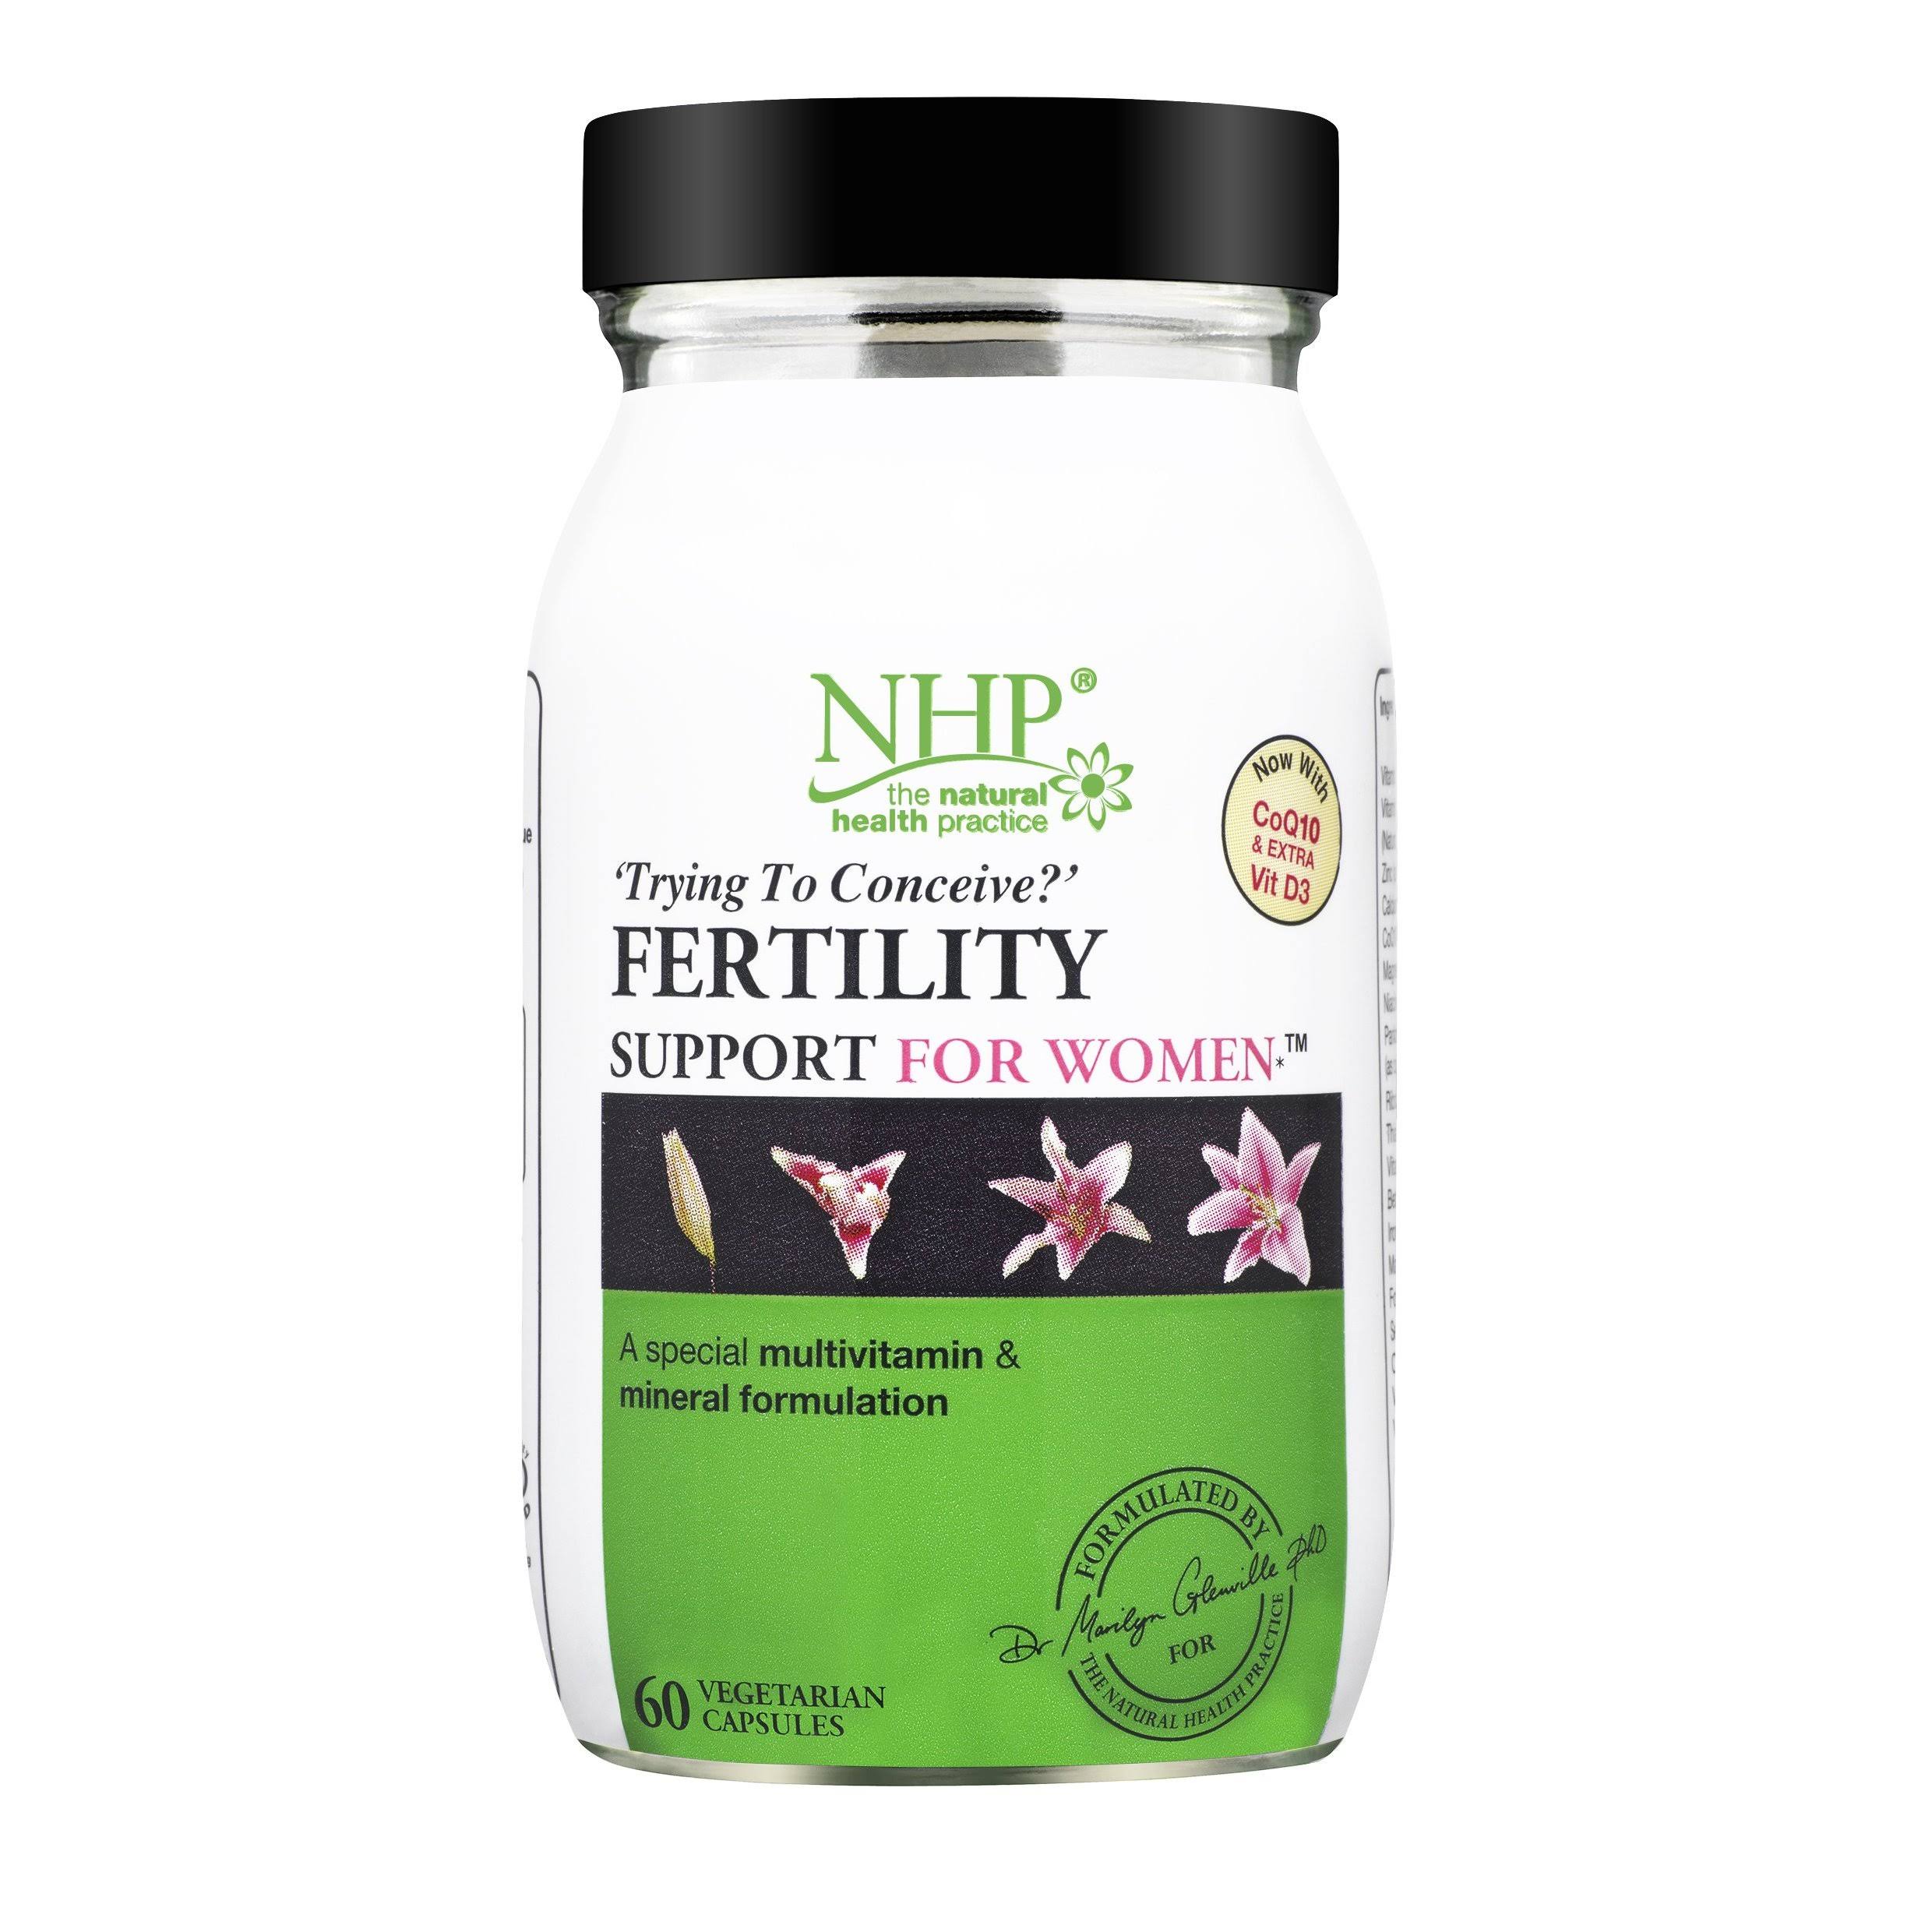 NHP Advanced Fertility Support for Women Supplement - 60ct